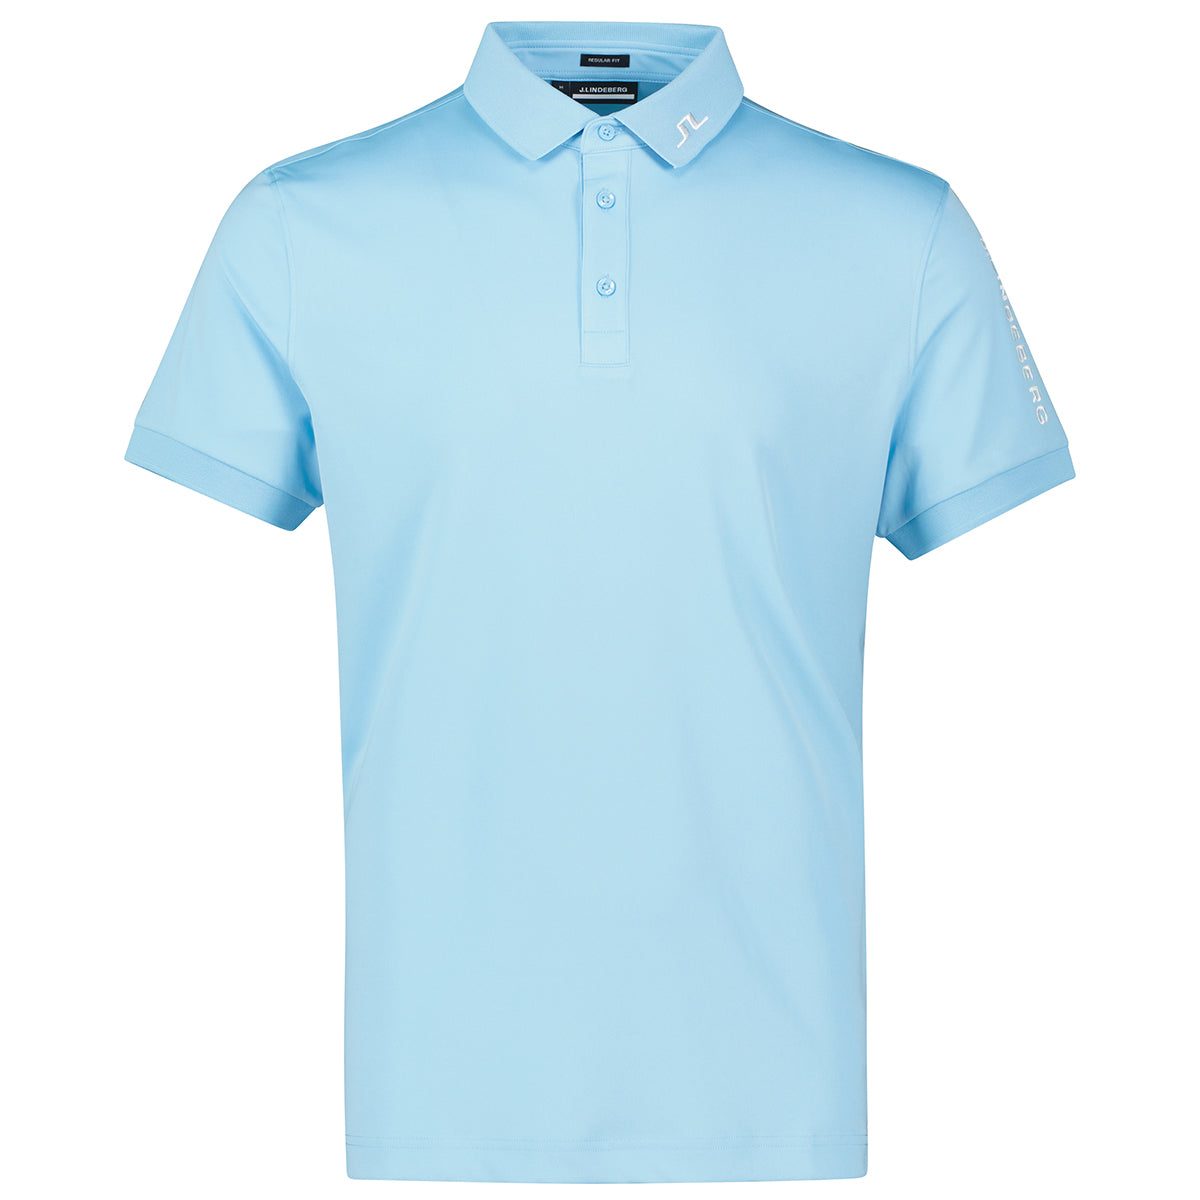 J Lindeberg Tour Tech Golf Polo Shirt GMJT09157